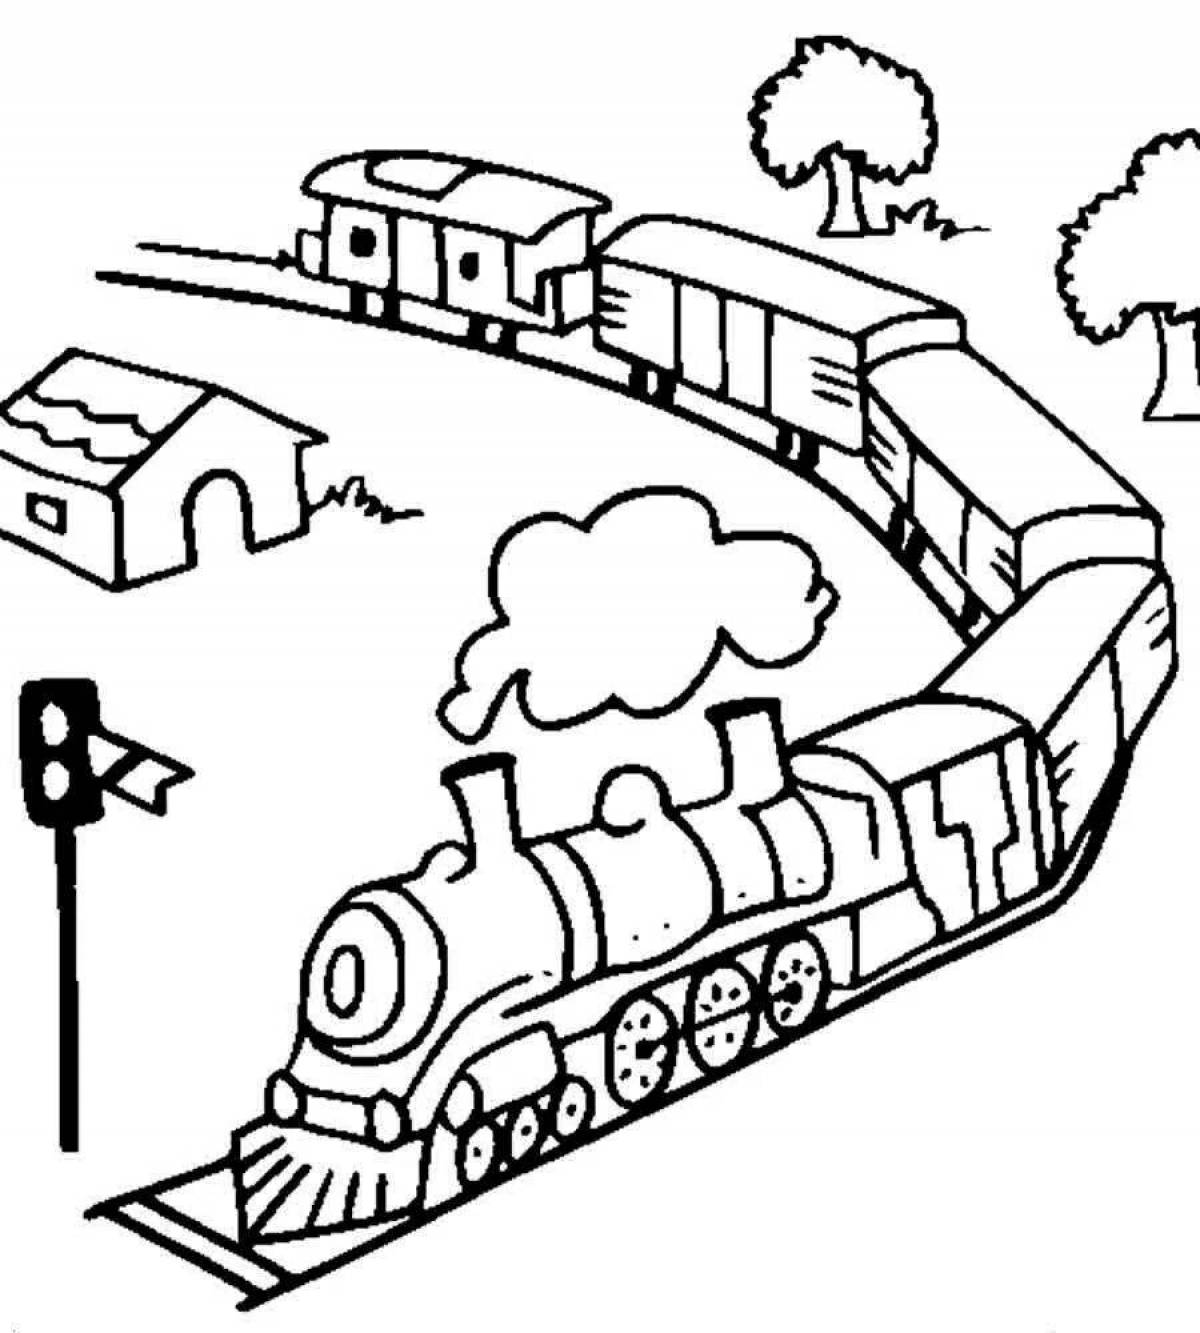 Изысканная детская раскраска поезда